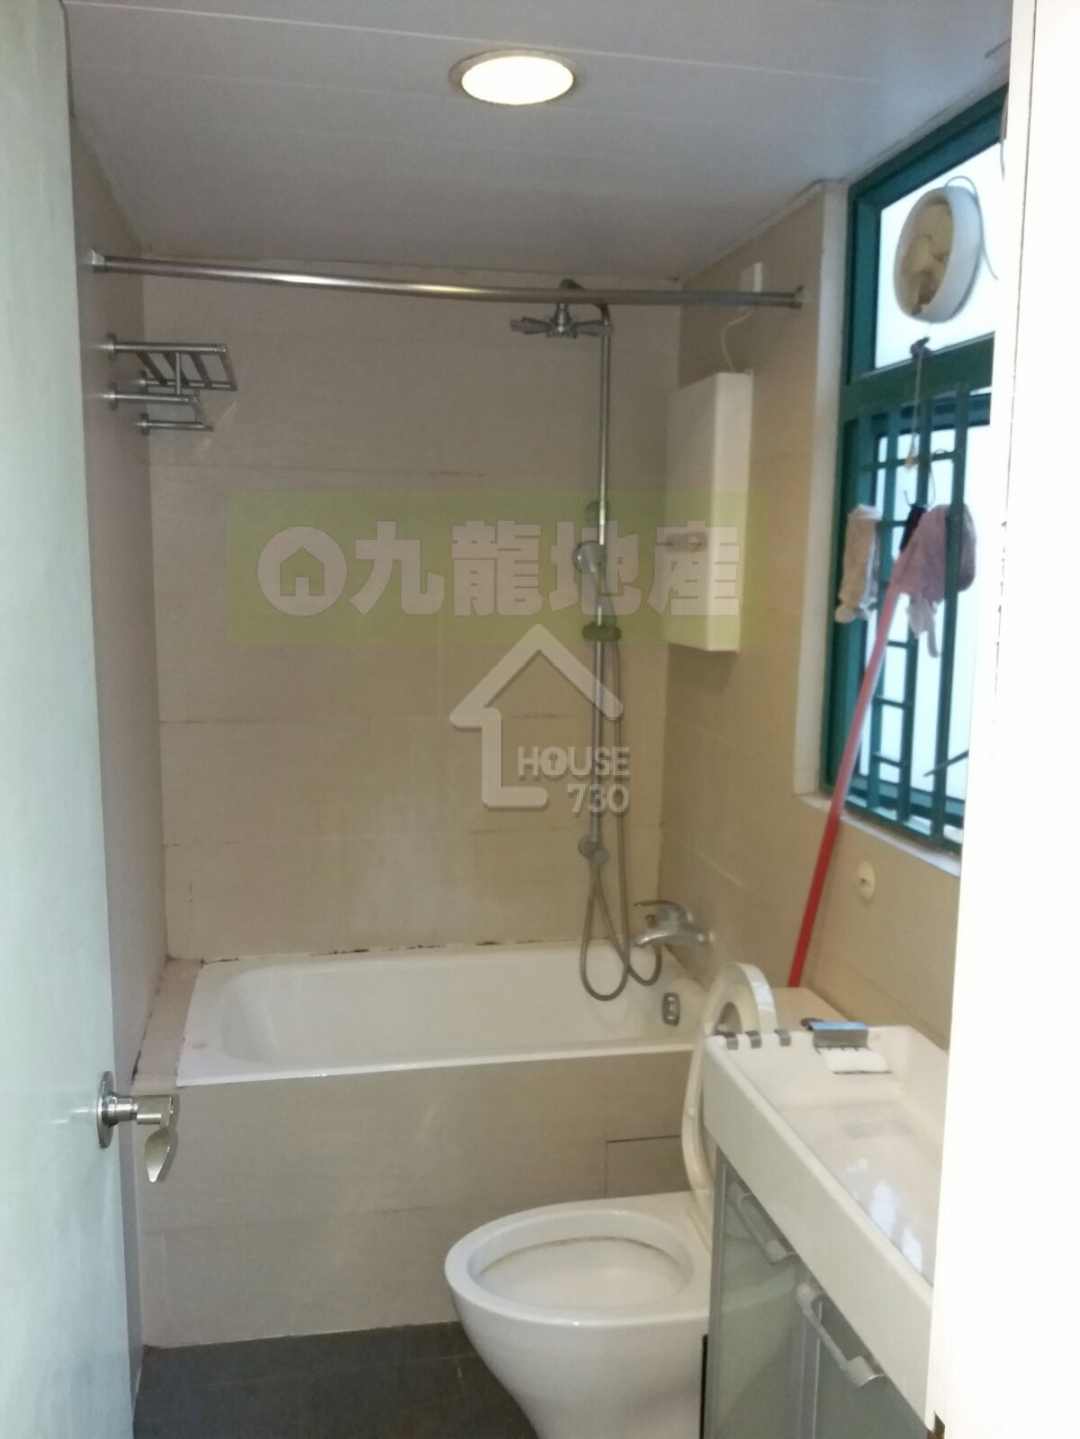 Sham Shui Po KENT PLACE Upper Floor Washroom House730-6685494